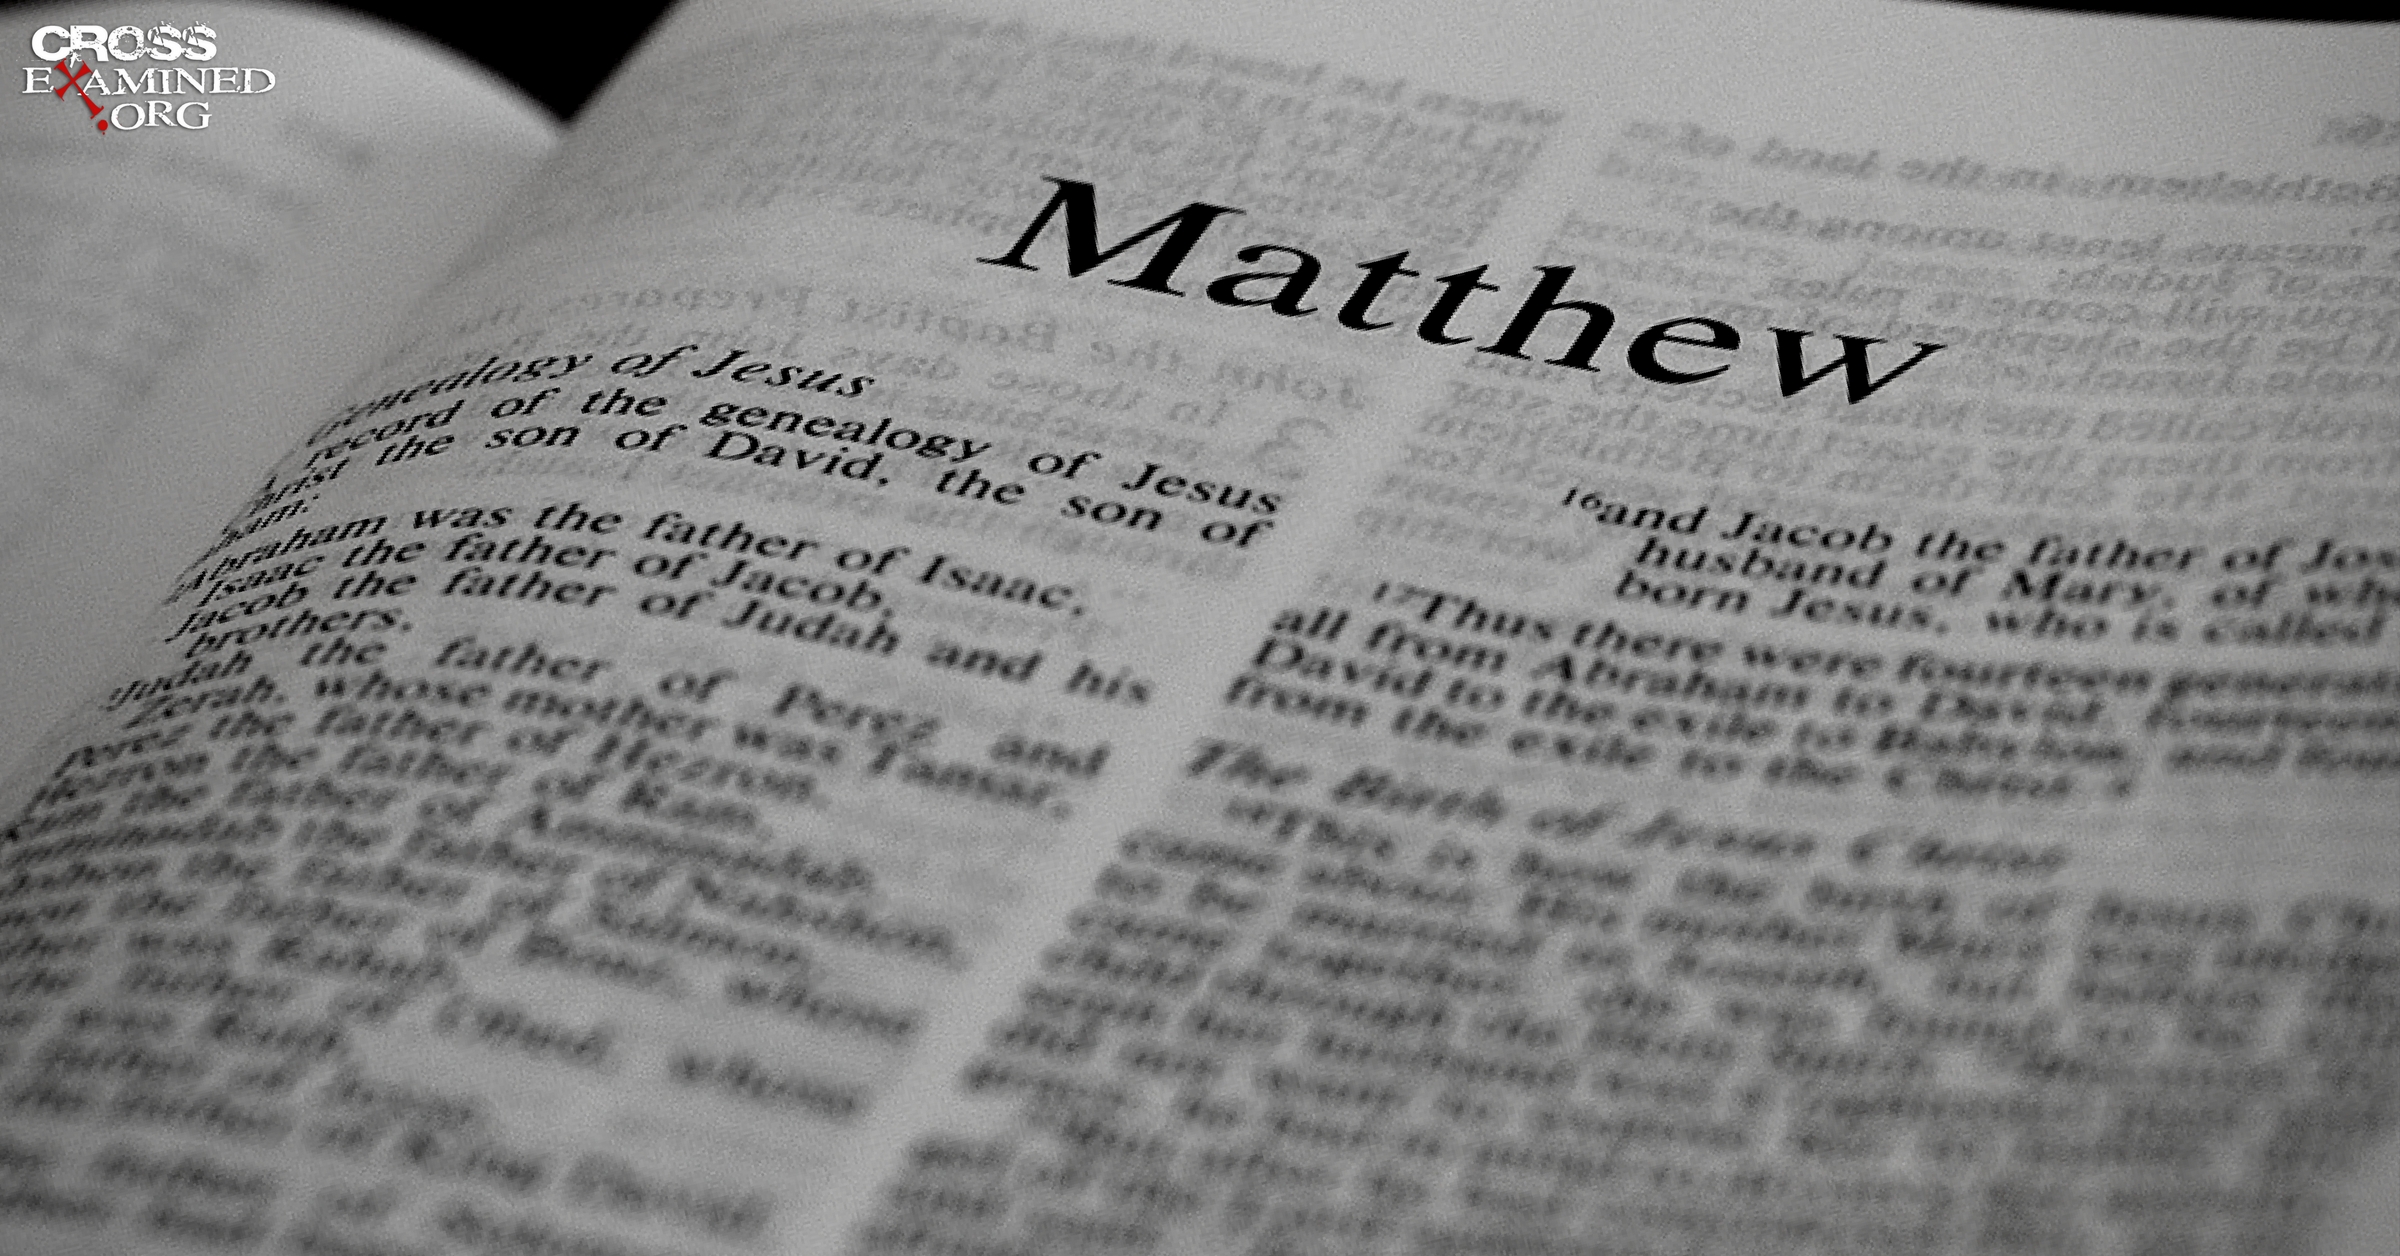 Who Wrote the Gospel of Matthew?